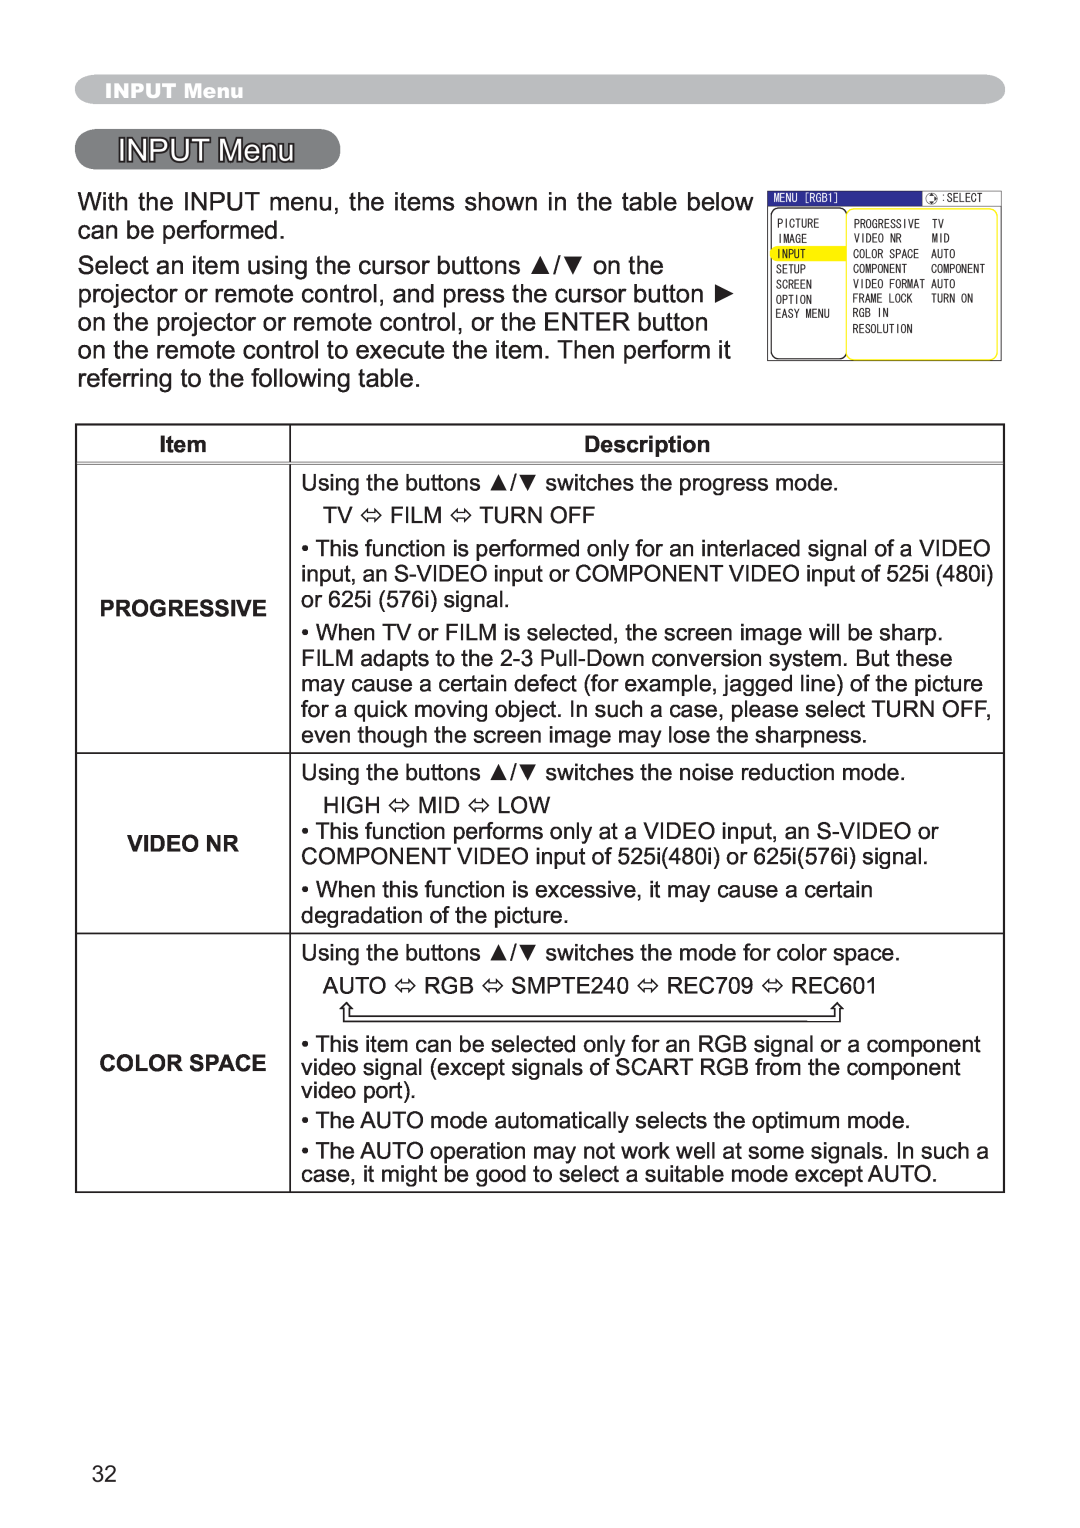 Hitachi CP-X251 user manual INPUT Menu, Description, Progressive, Video Nr 